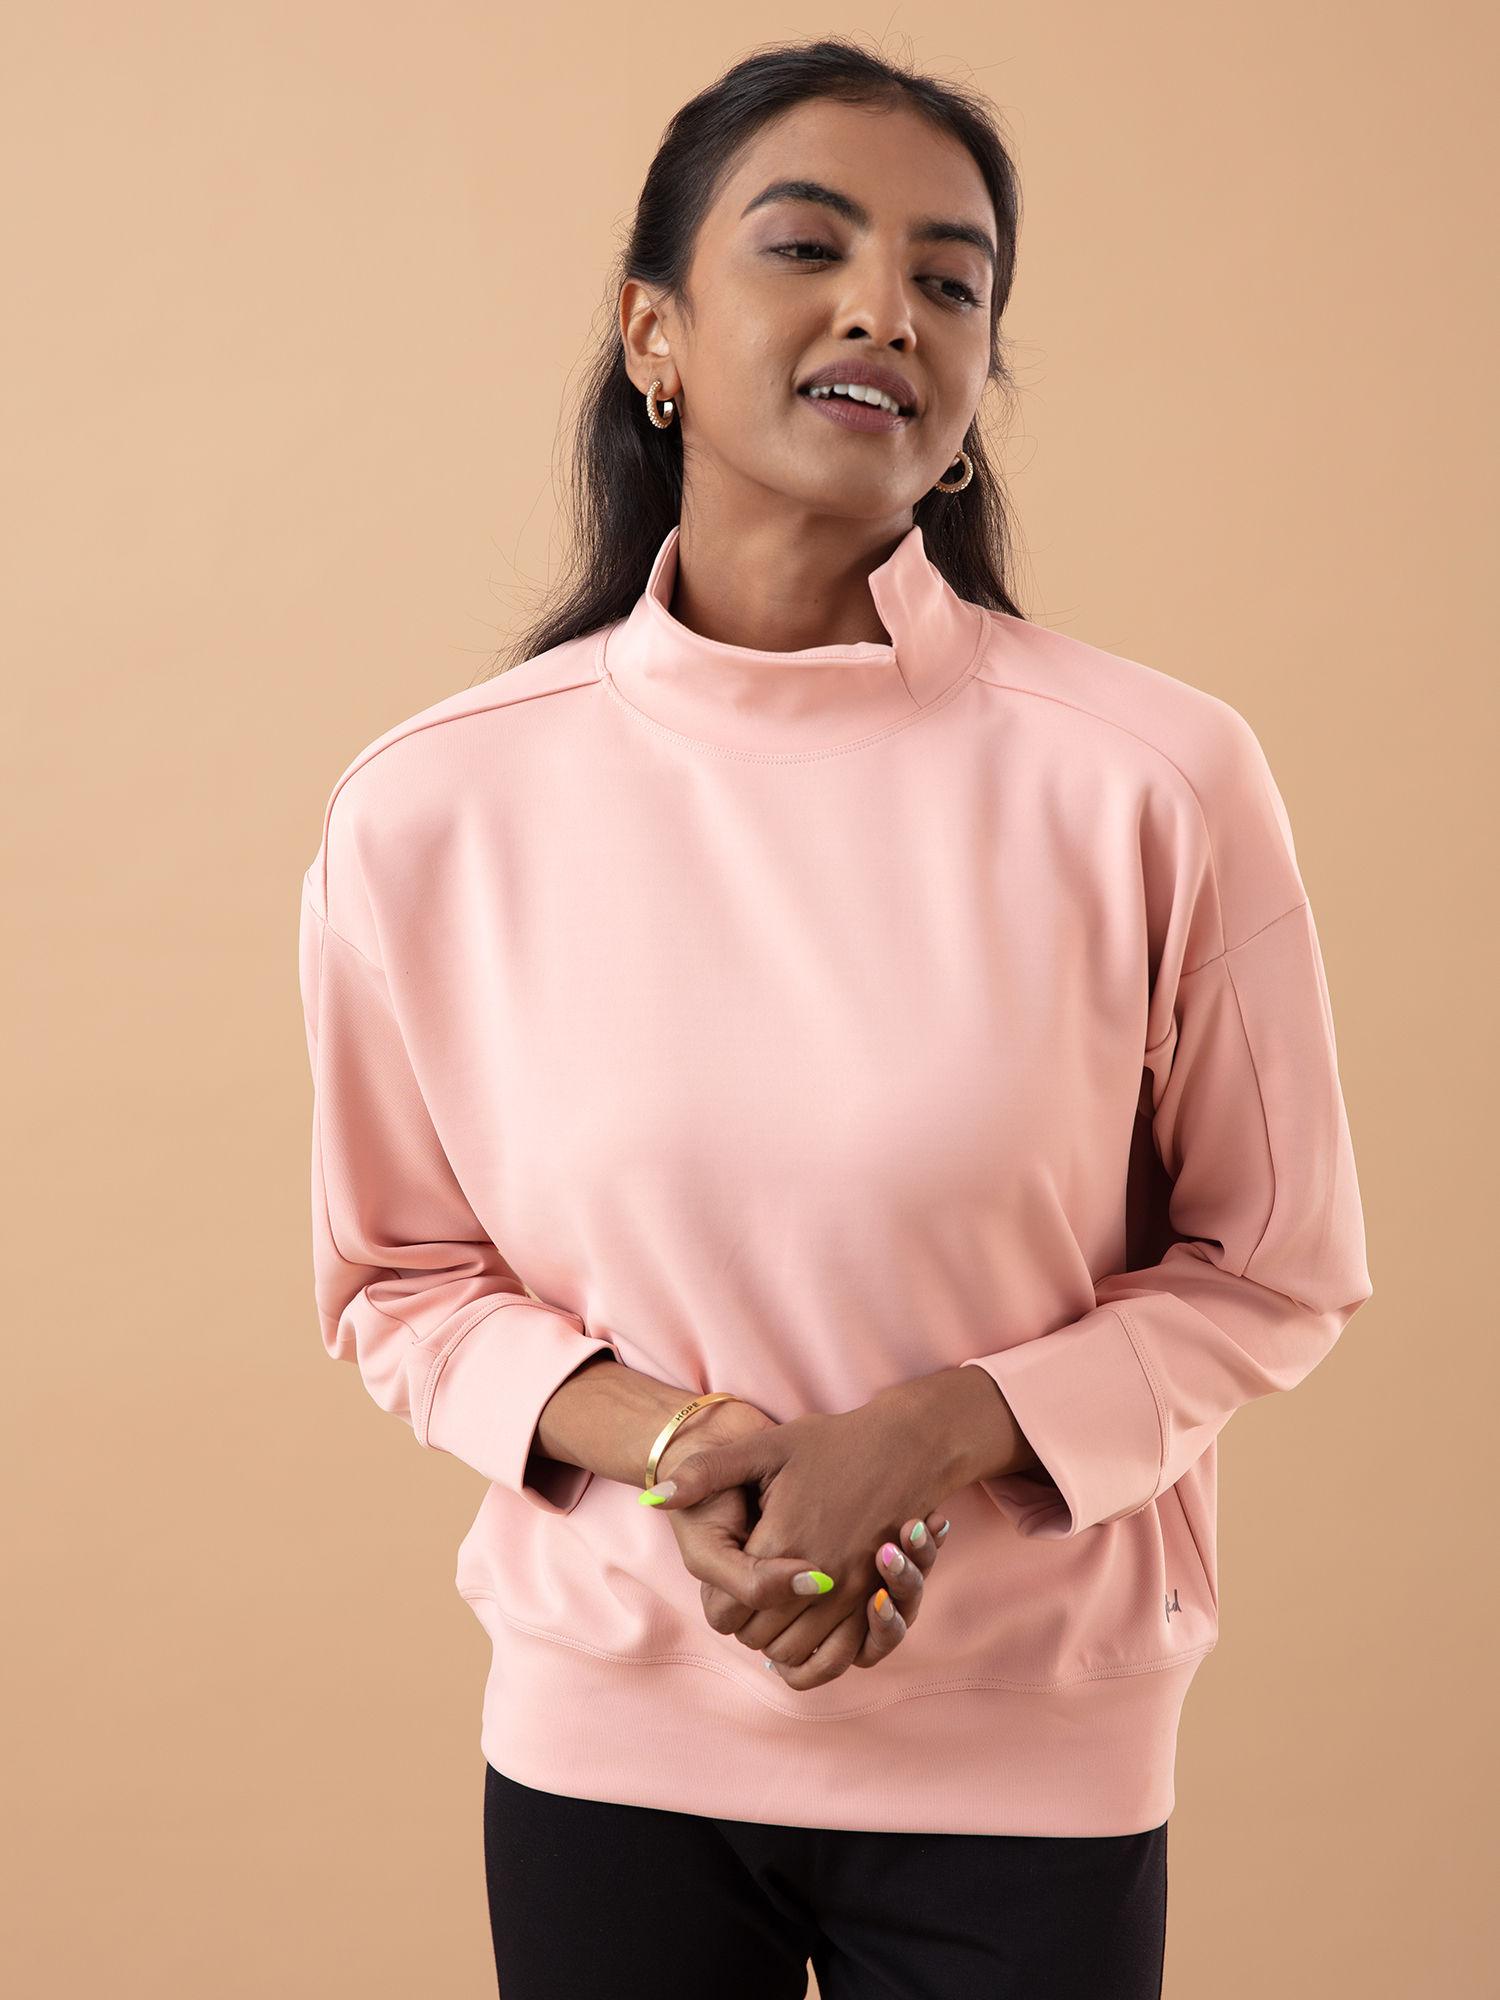 nykd all day casual chic high neck sweatshirt - nyat157 pink